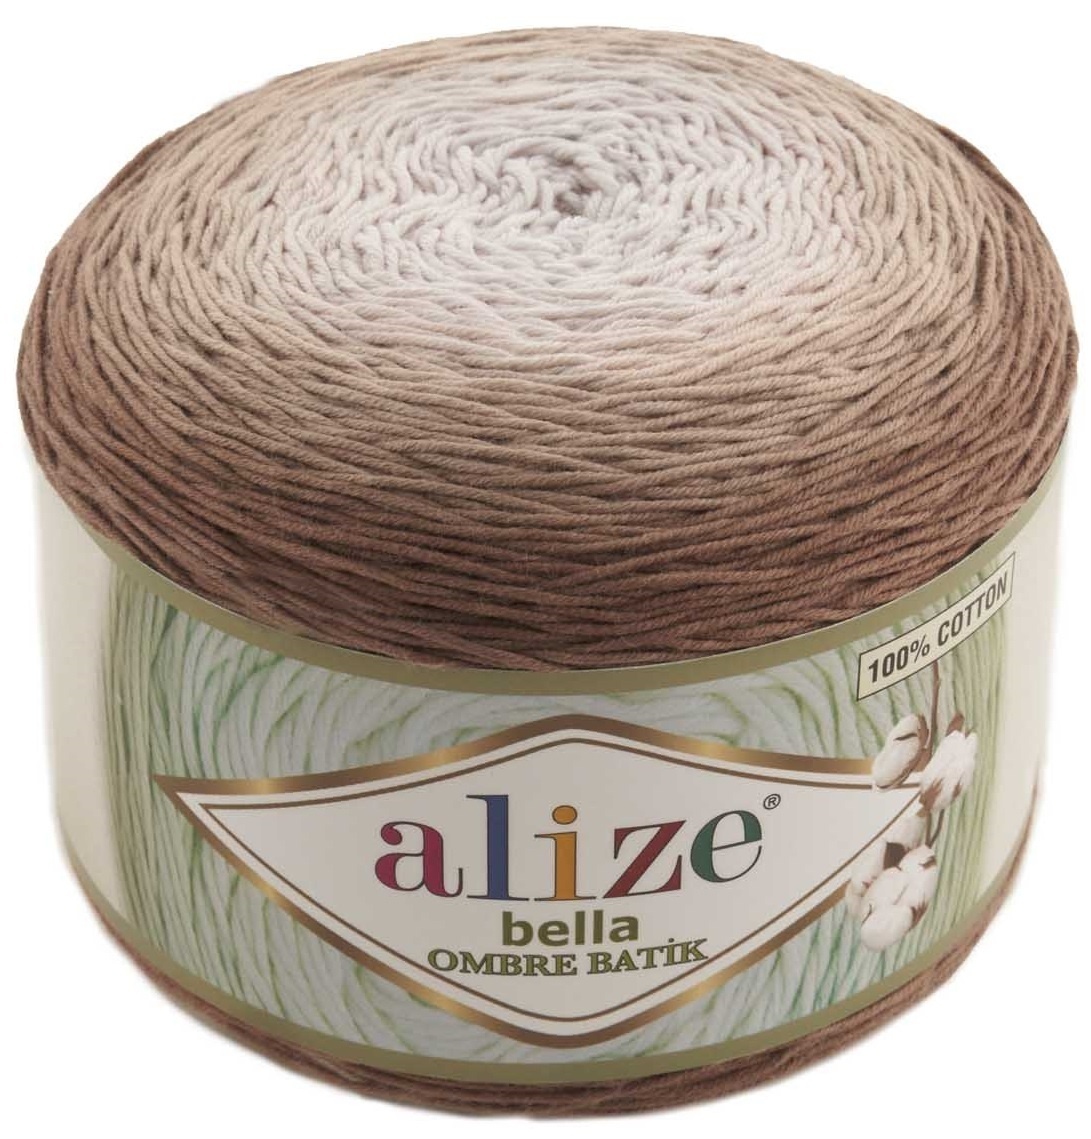 Alize Bella Ombre Batik 100% cotton, 2 Skein Value Pack, 500g фото 9